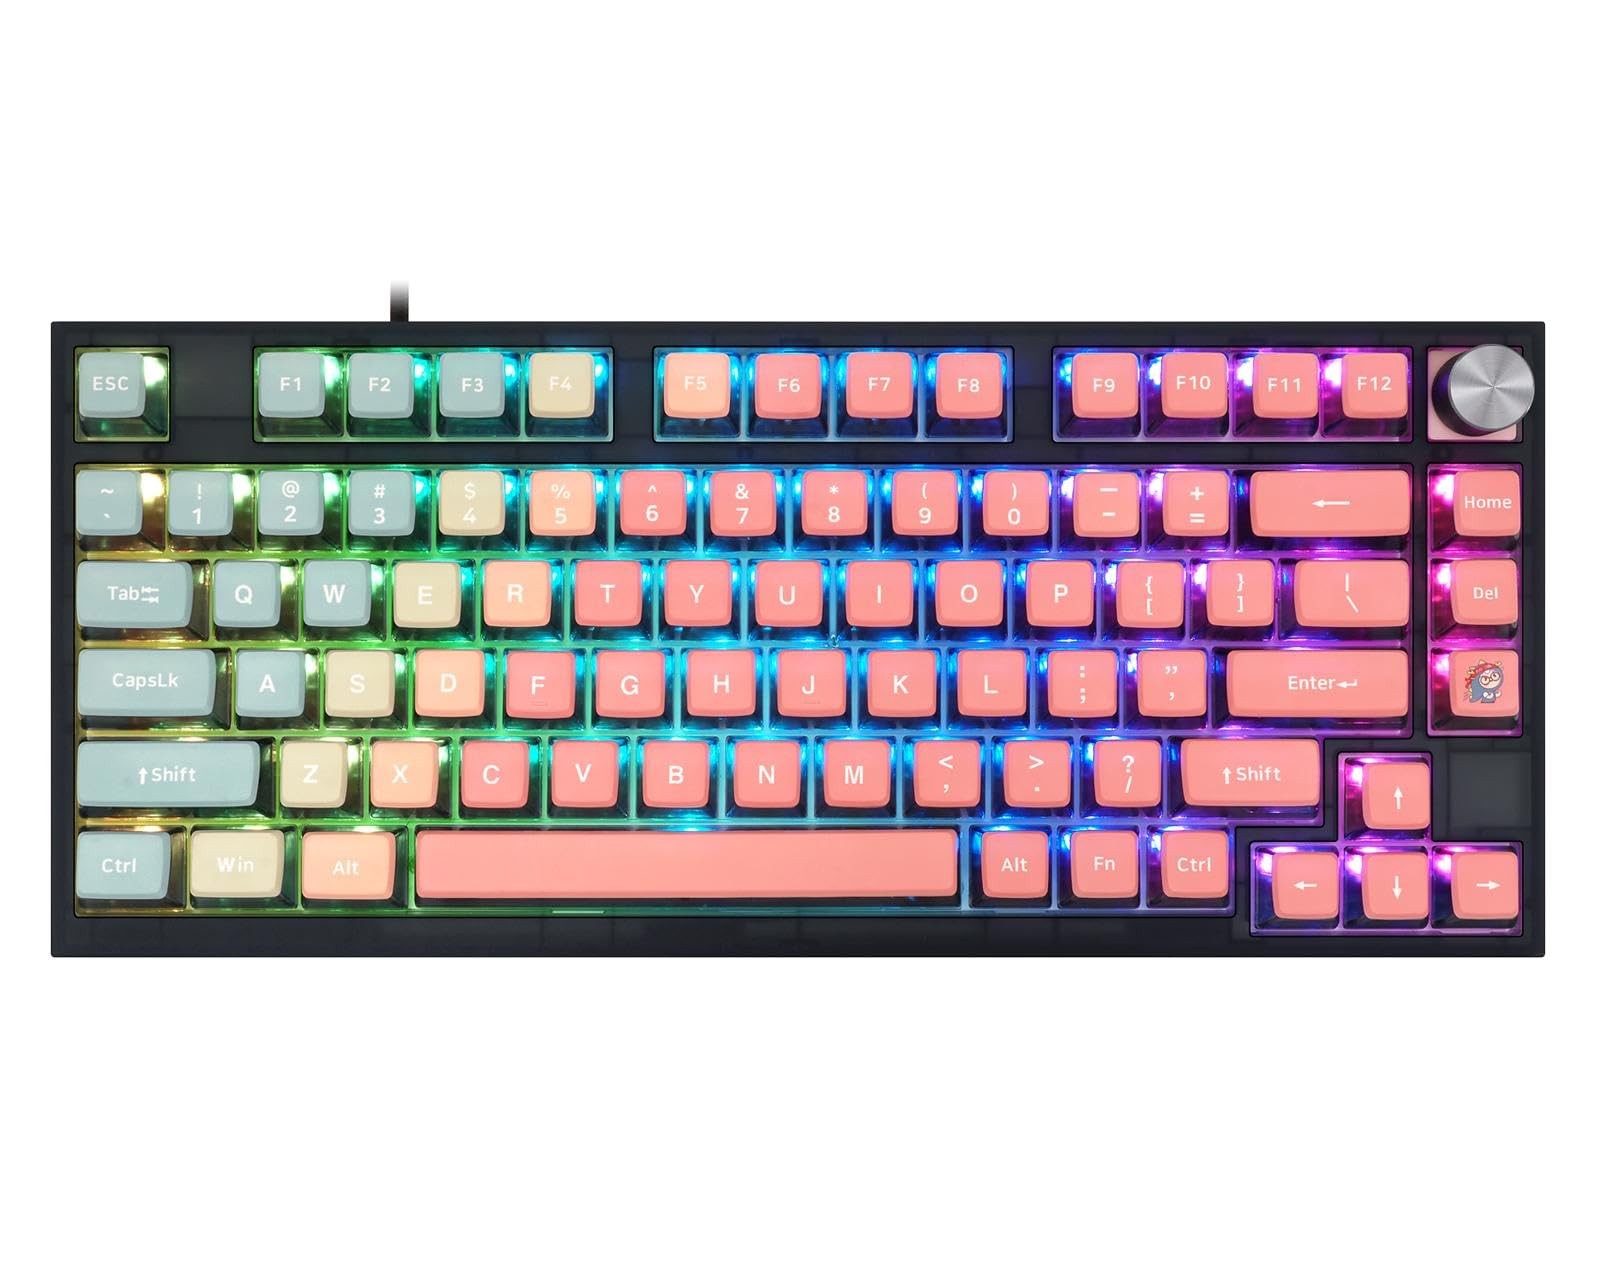 Pink Theme 80 Keys Tri-Mode Keyboard with Knob